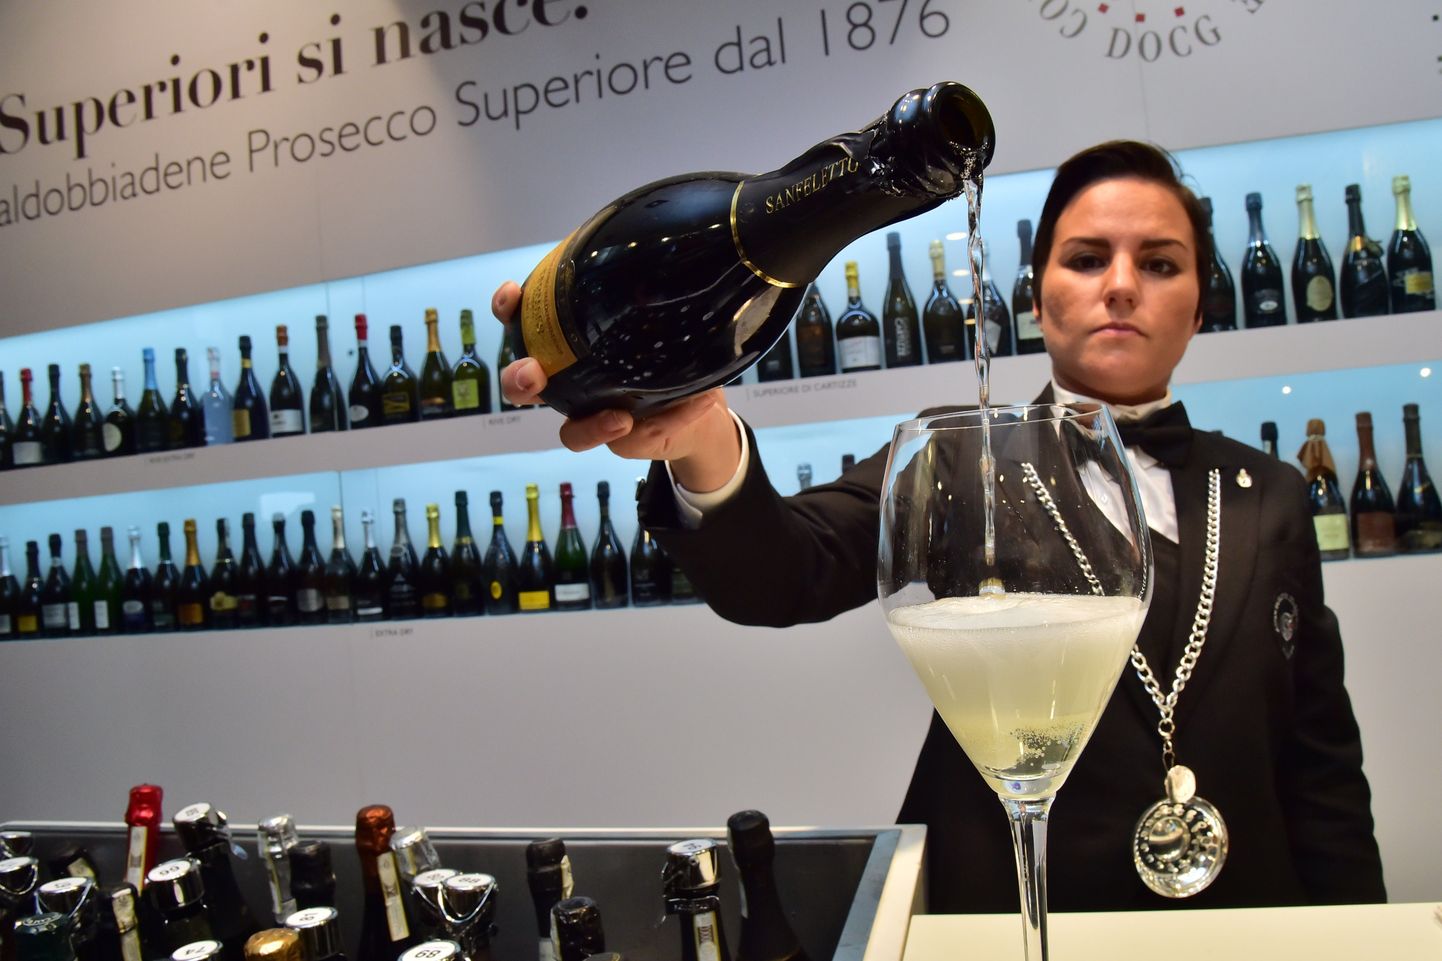 An Italian vendor serves Prosecco Valdobbiane superior, on March 23, 2015 at the Vinitaly exposition in Verona. AFP PHOTO / GIUSEPPE CACACE